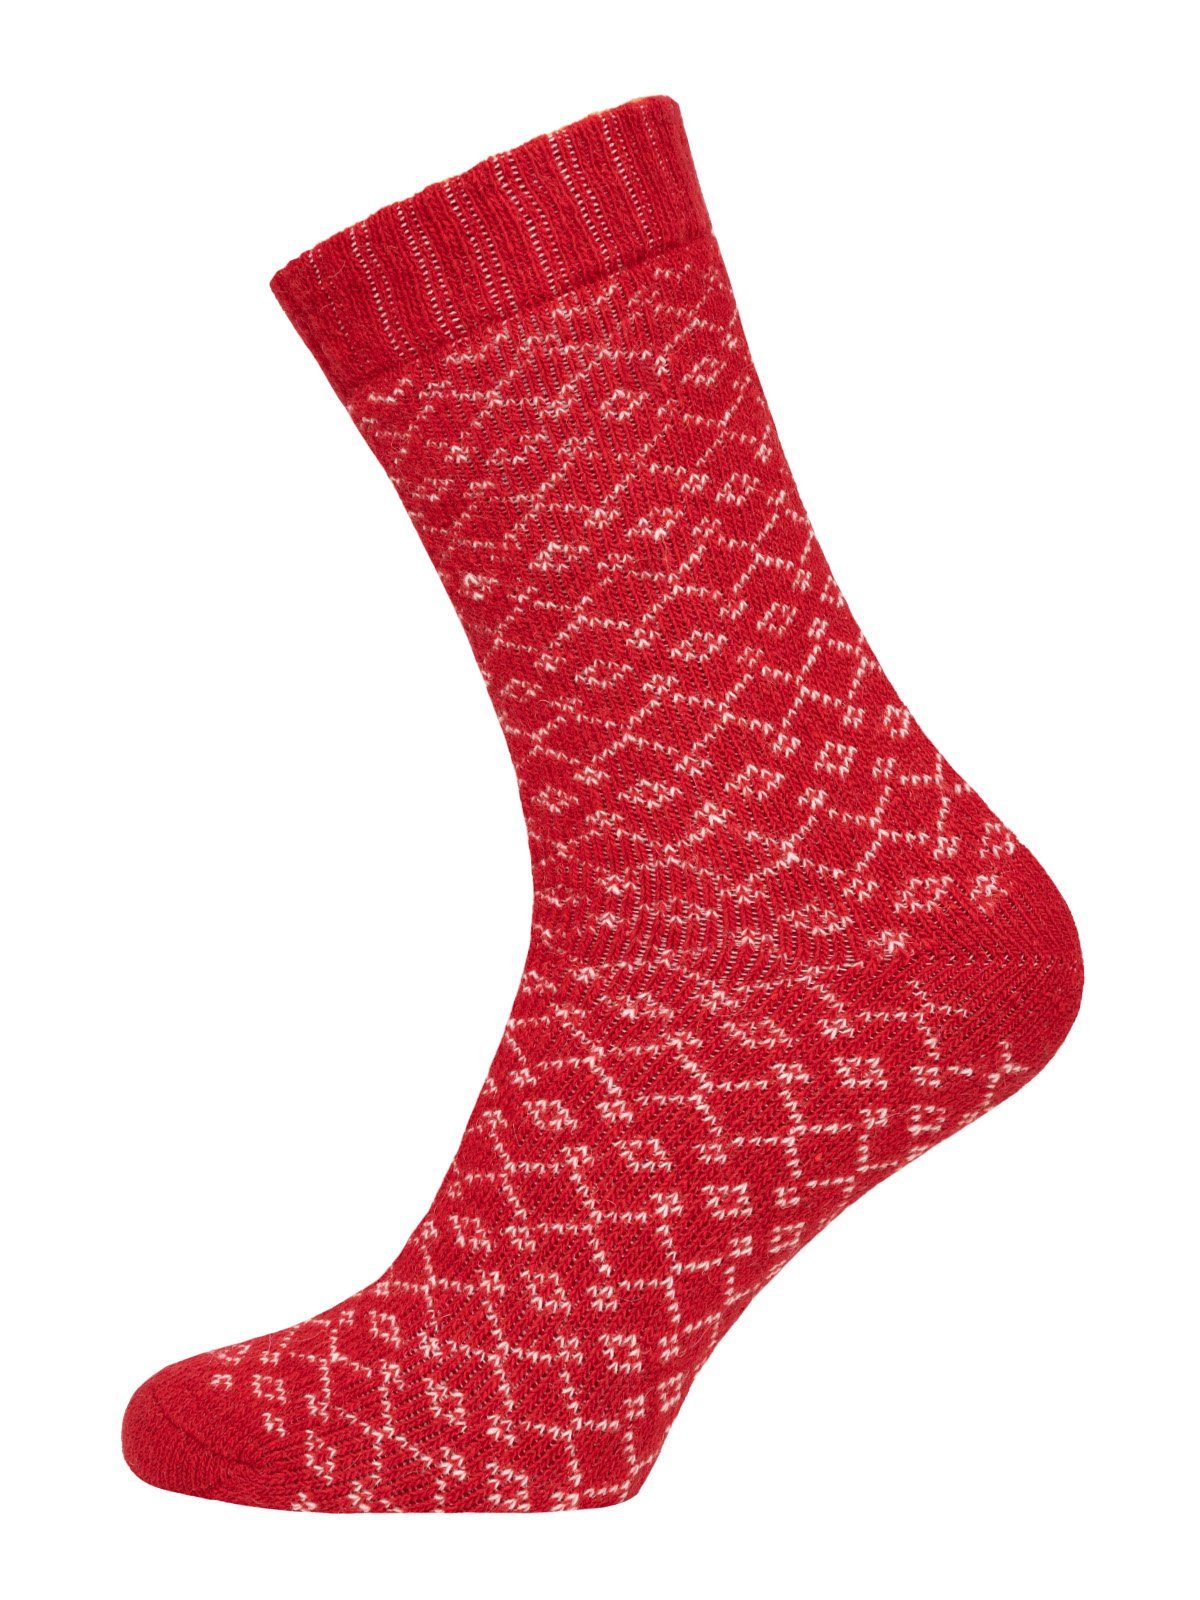 HomeOfSocks Socken Hygge Socken Dick Für Herren & Damen mit Wolle Dicke Socken Hyggelig Warm Mit Hohem 45% Wollanteil In Bunten Design Rot